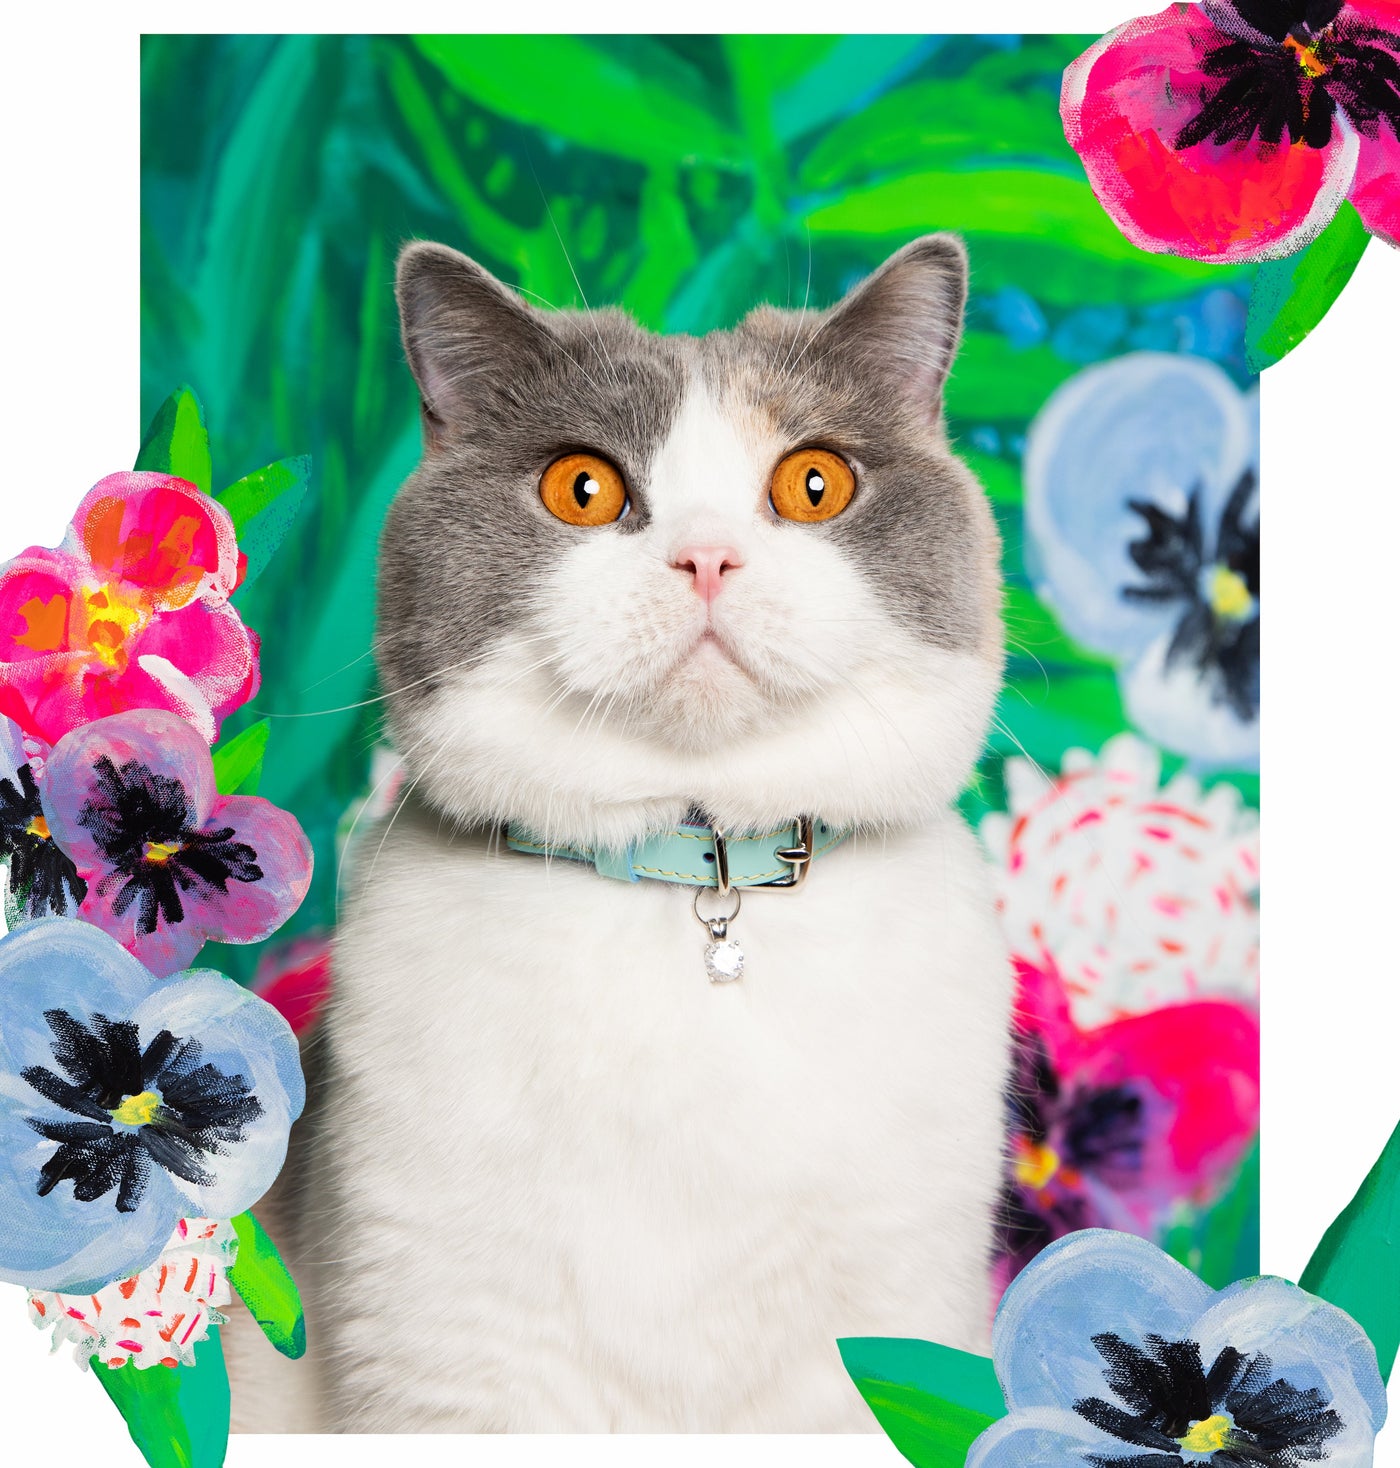 Famous Louis Wain Cat Print please Mr. Persian 